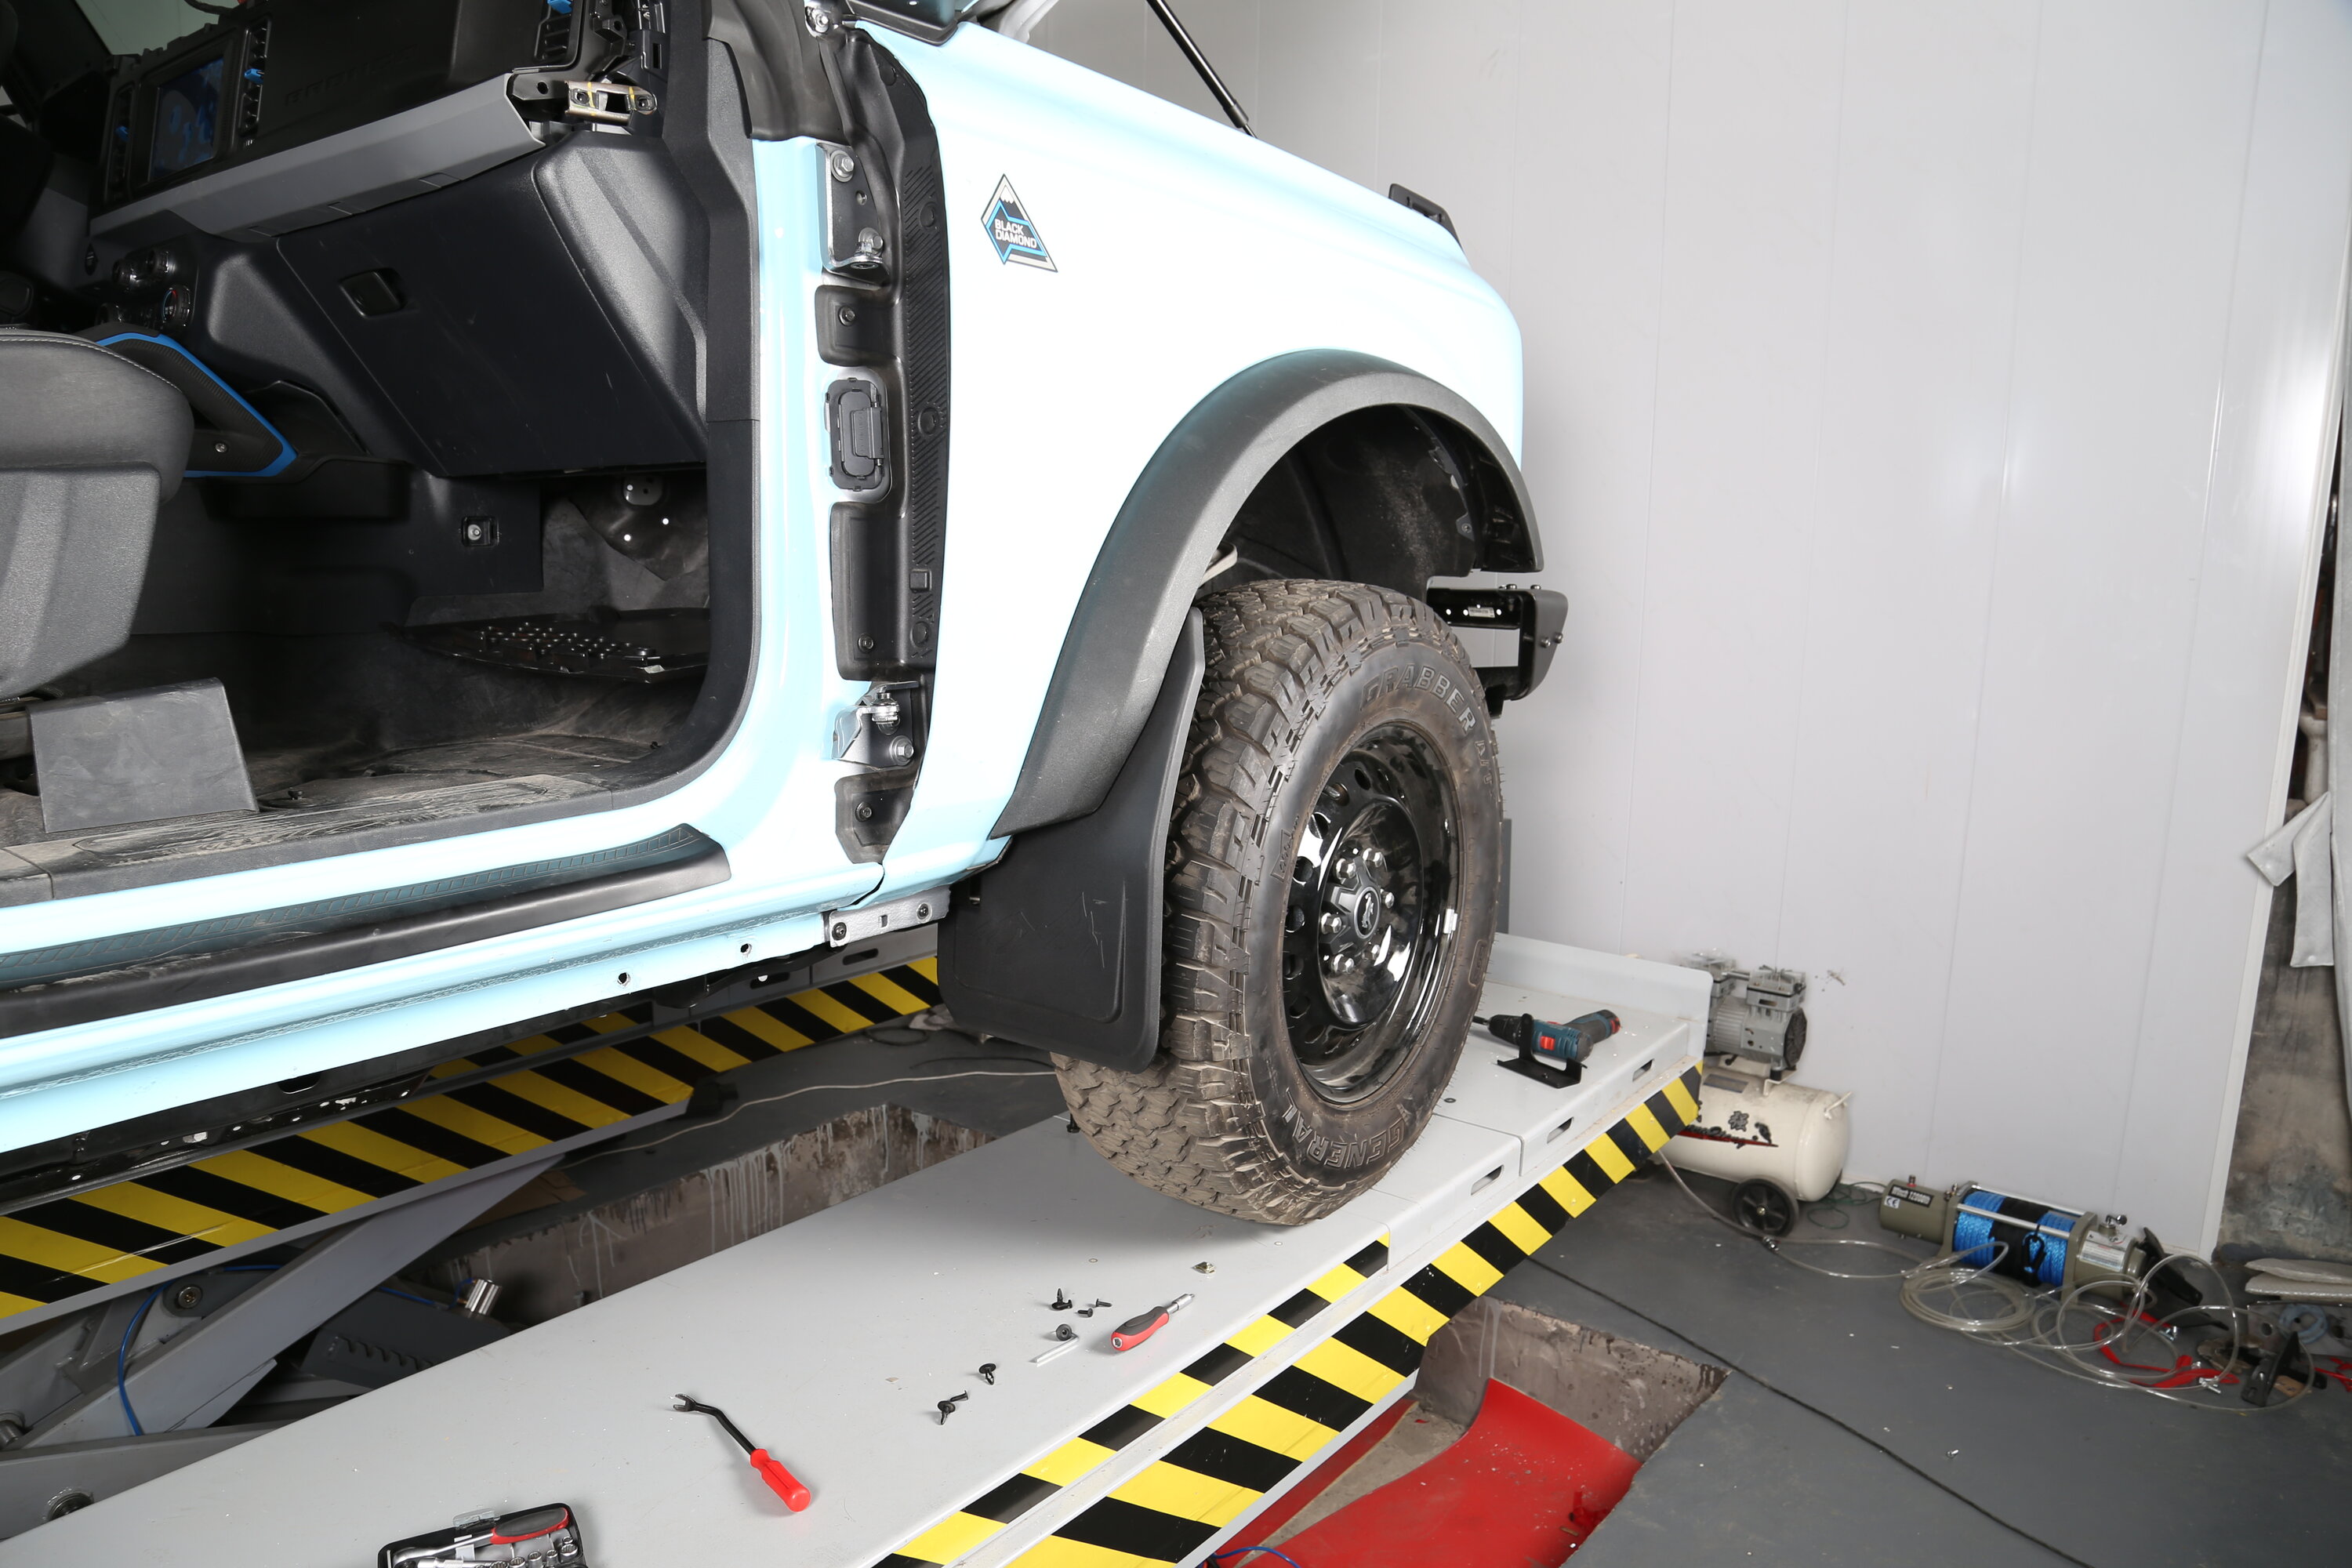 Ford Bronco Mabett Mud Flaps Fits Sasquatch set that accommodates factory rock rails or tube steps A221BA50-C5CE-4D66-8D40-9ACD8C56AA7E